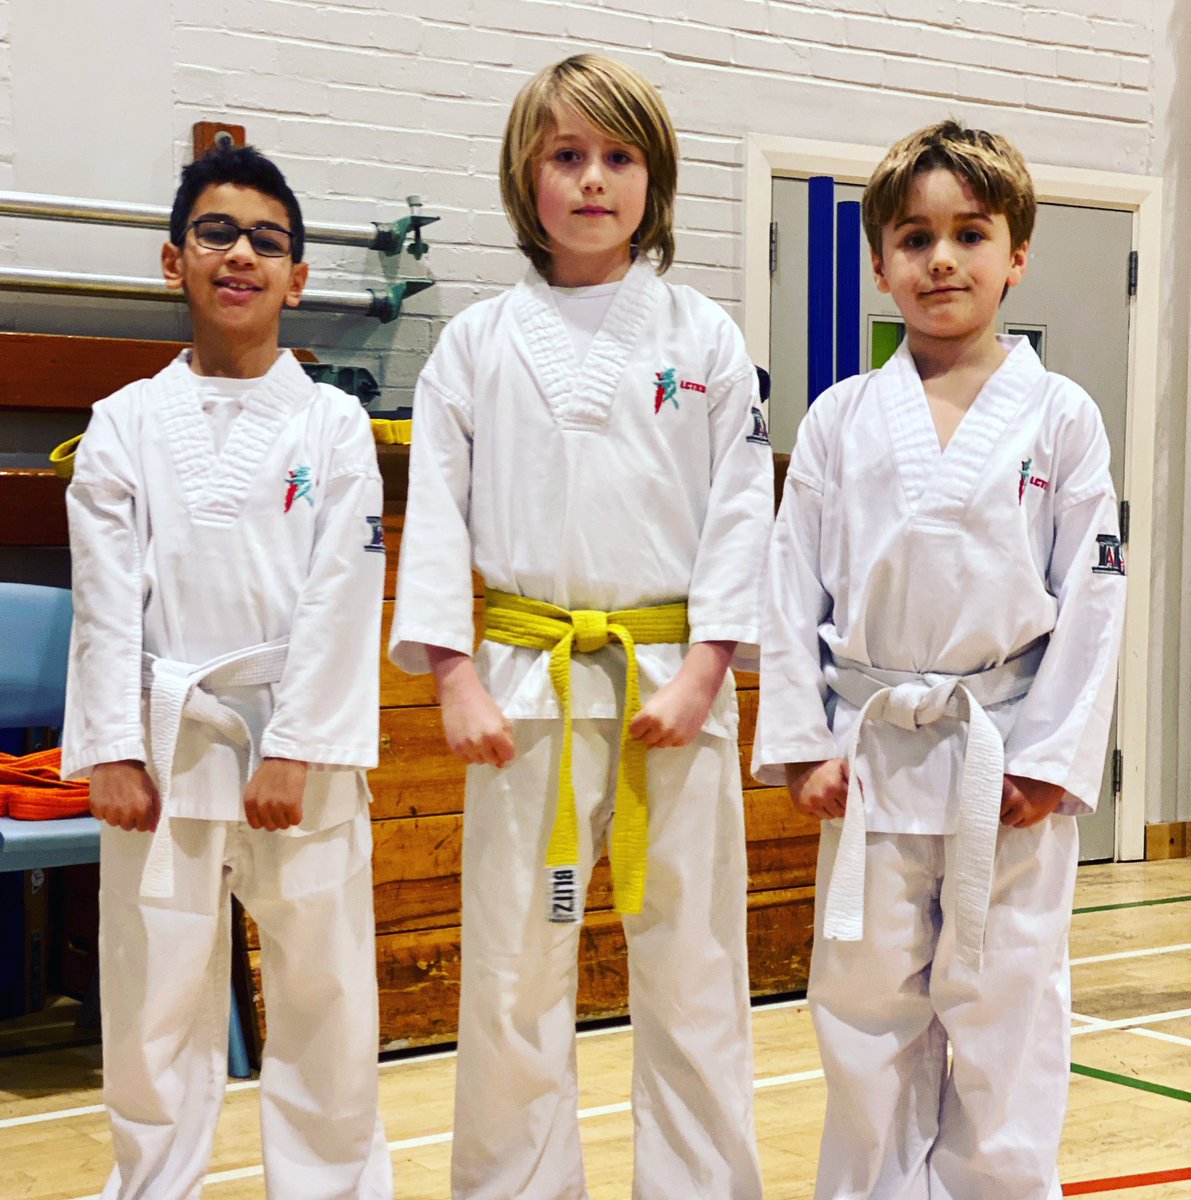 Ready for Taekwondo! #afterschoolactivity #taekwondotraining #prepschoolclub #arnoldhouseschool